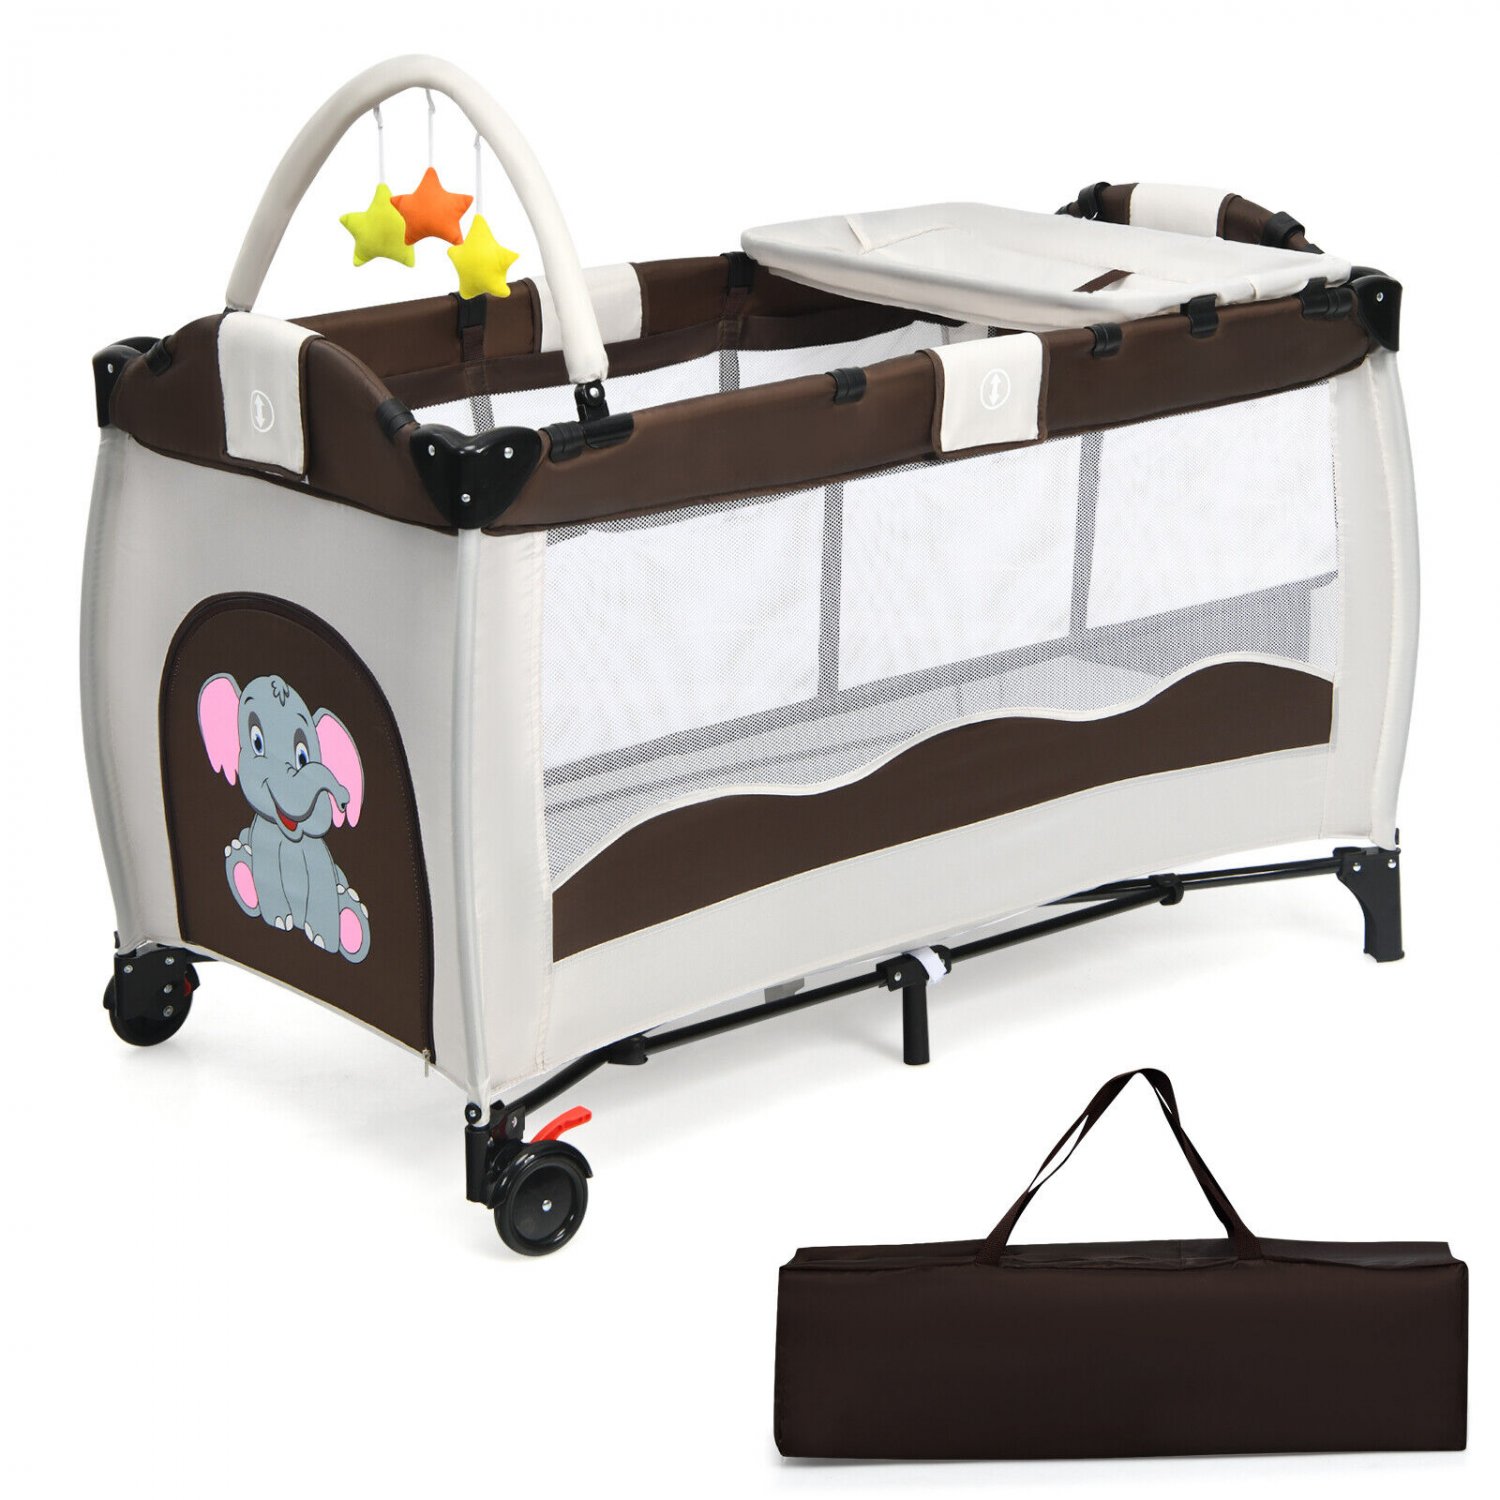 Costway Coffee Baby Crib Playpen Playard Pack Travel Infant Bassinet Foldable